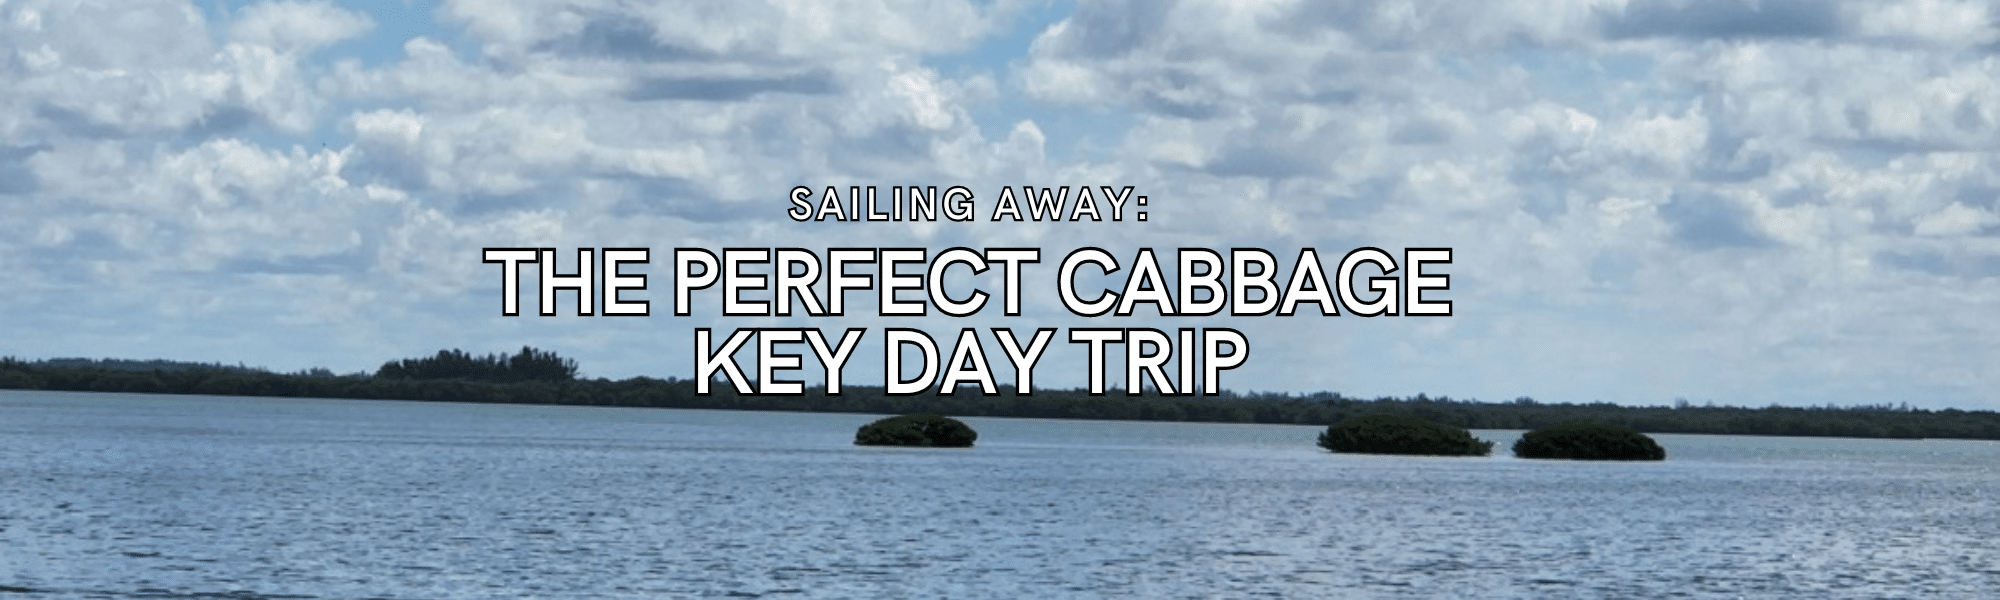 Sailing Away Cabbage Key Day Trip